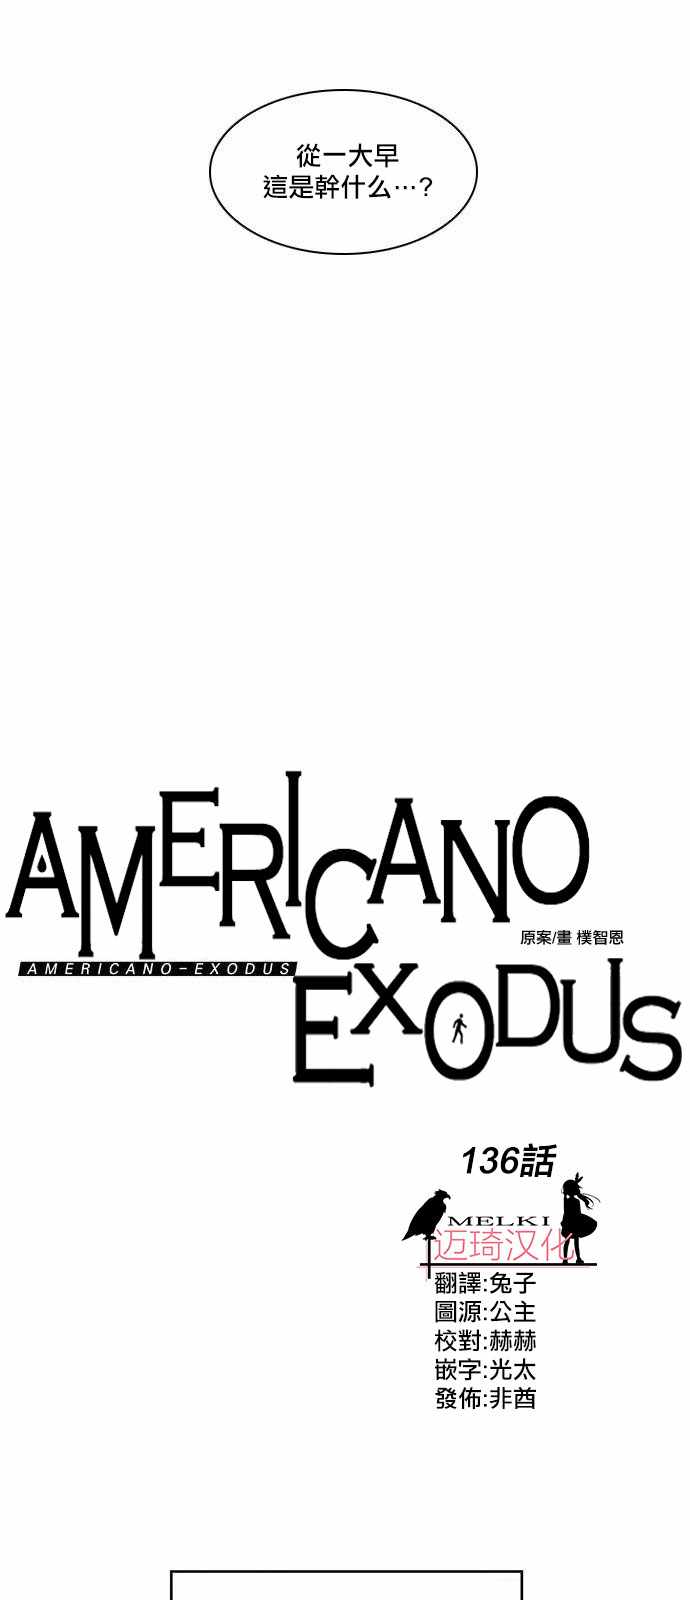 《Americano-exodus》漫画 exodus 136集